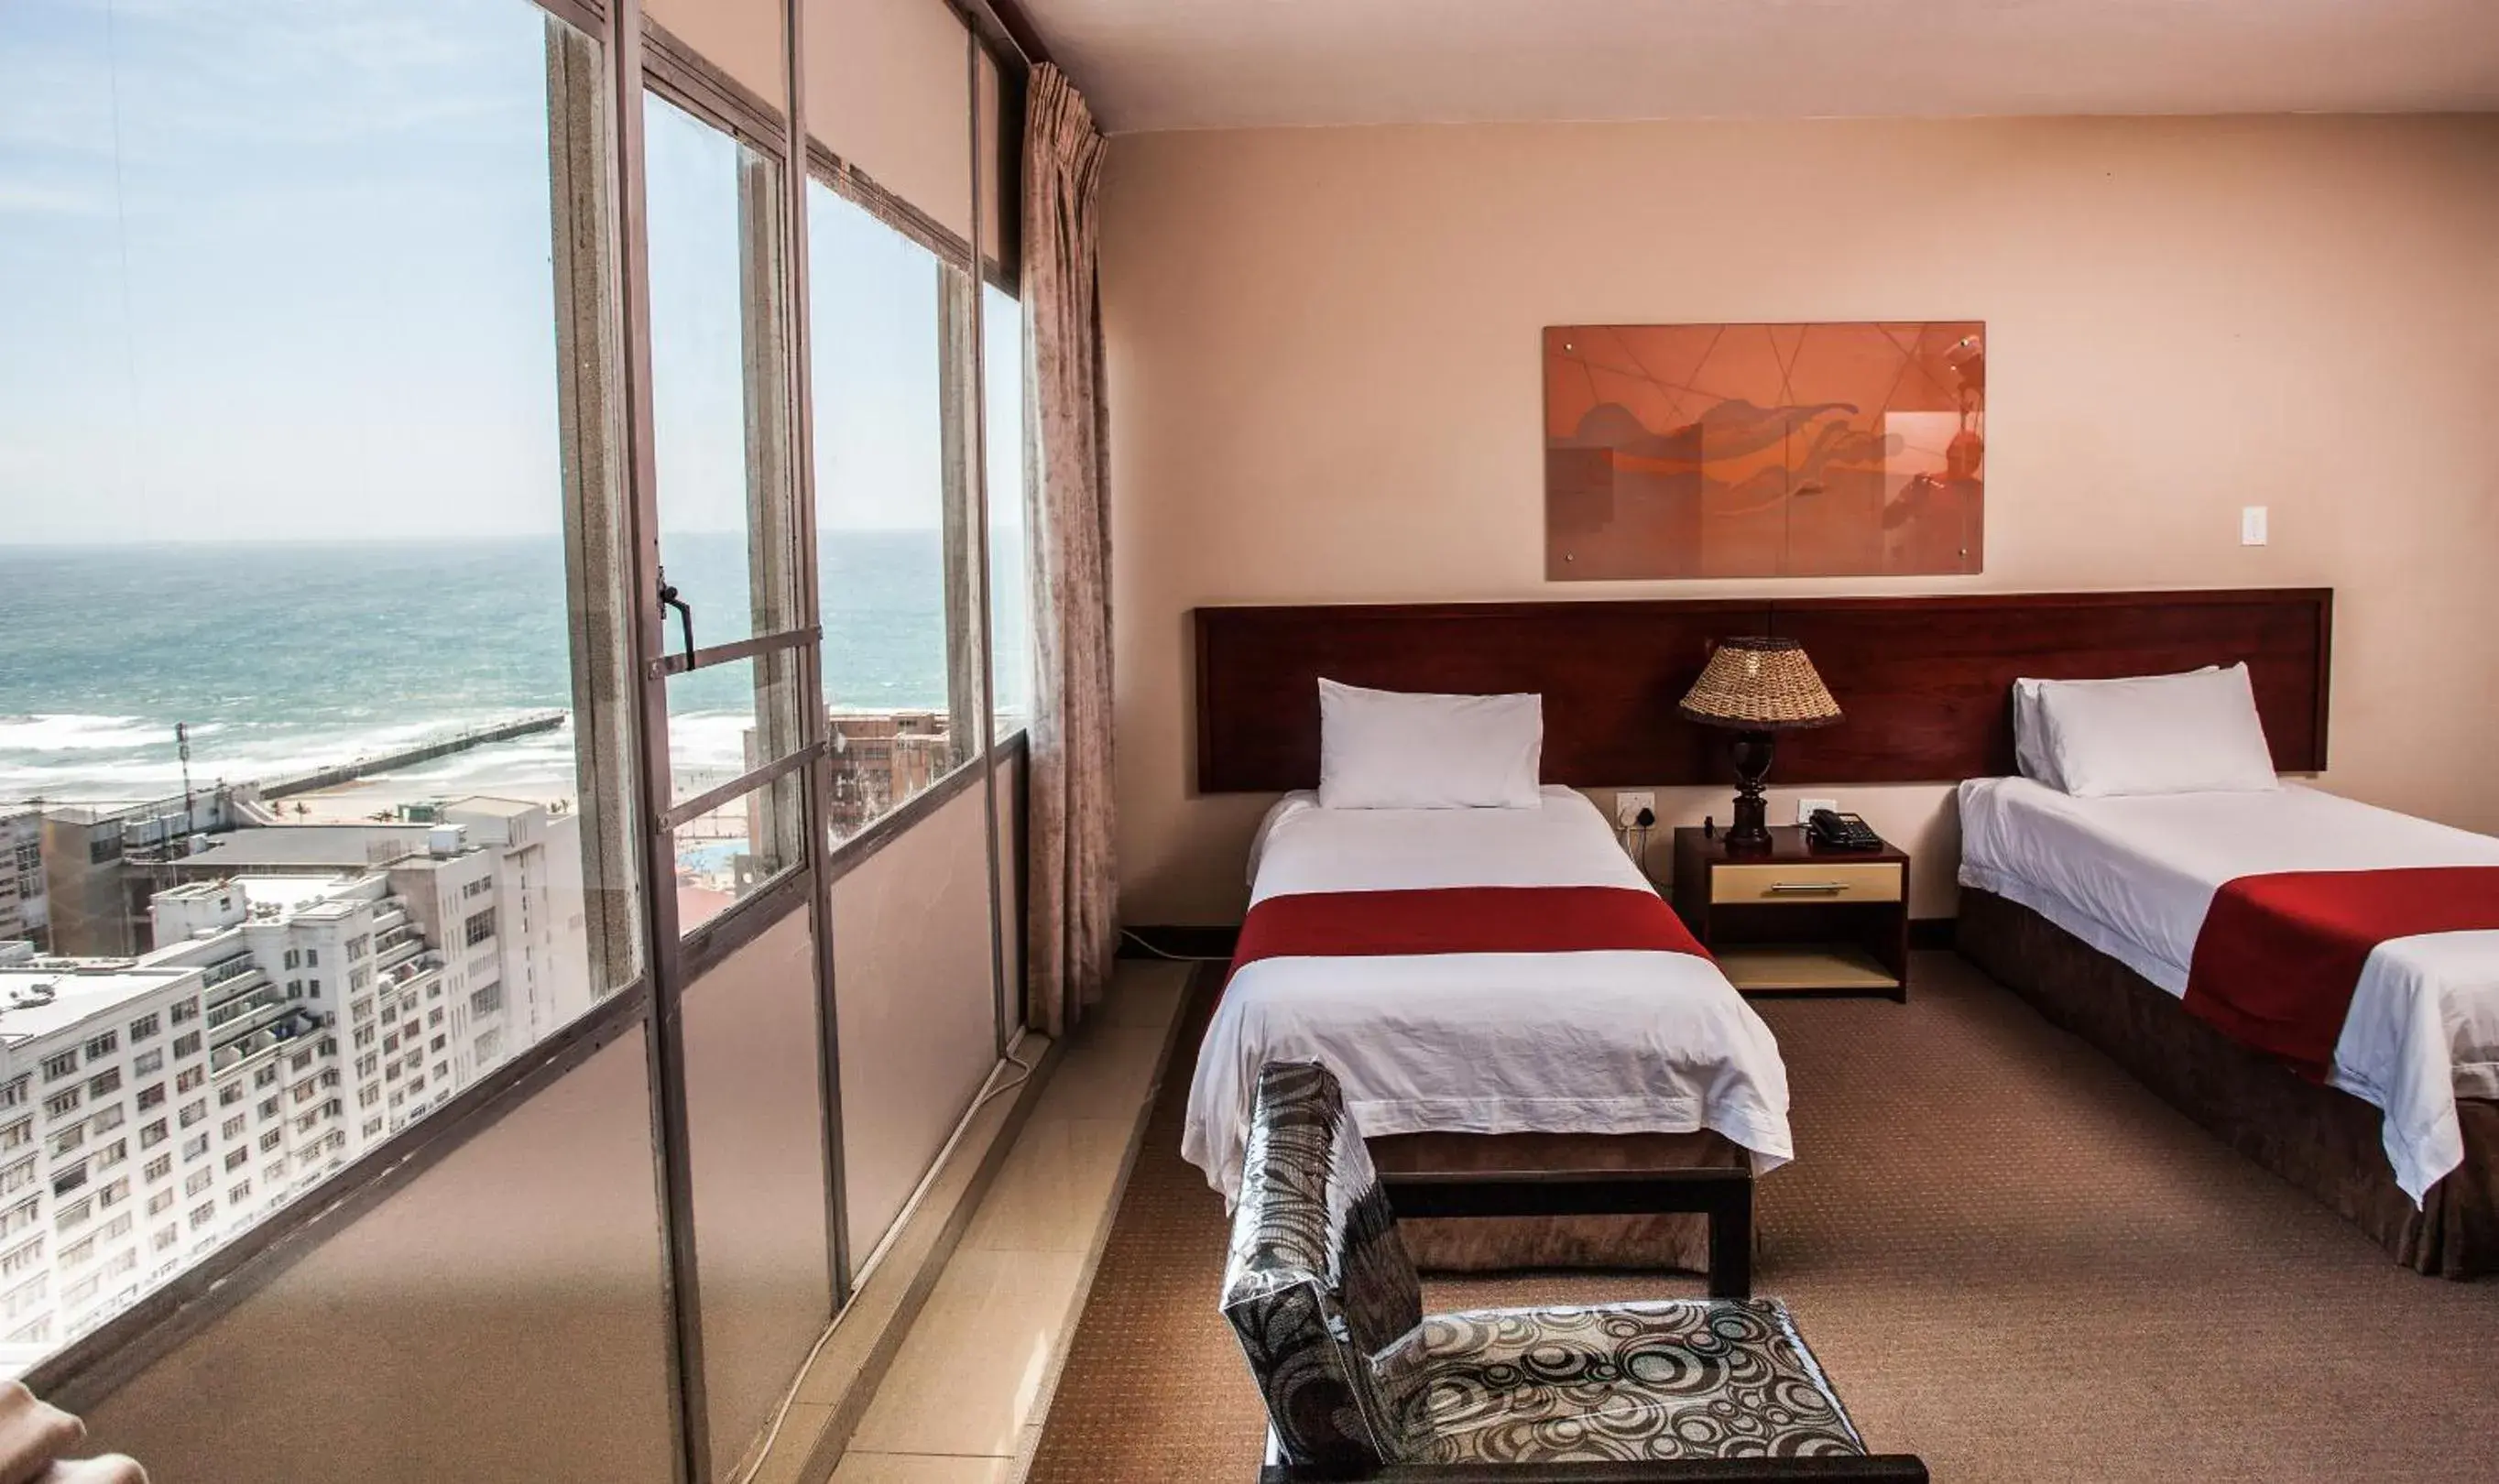 Bedroom in Coastlands Durban Self Catering Holiday Apartments